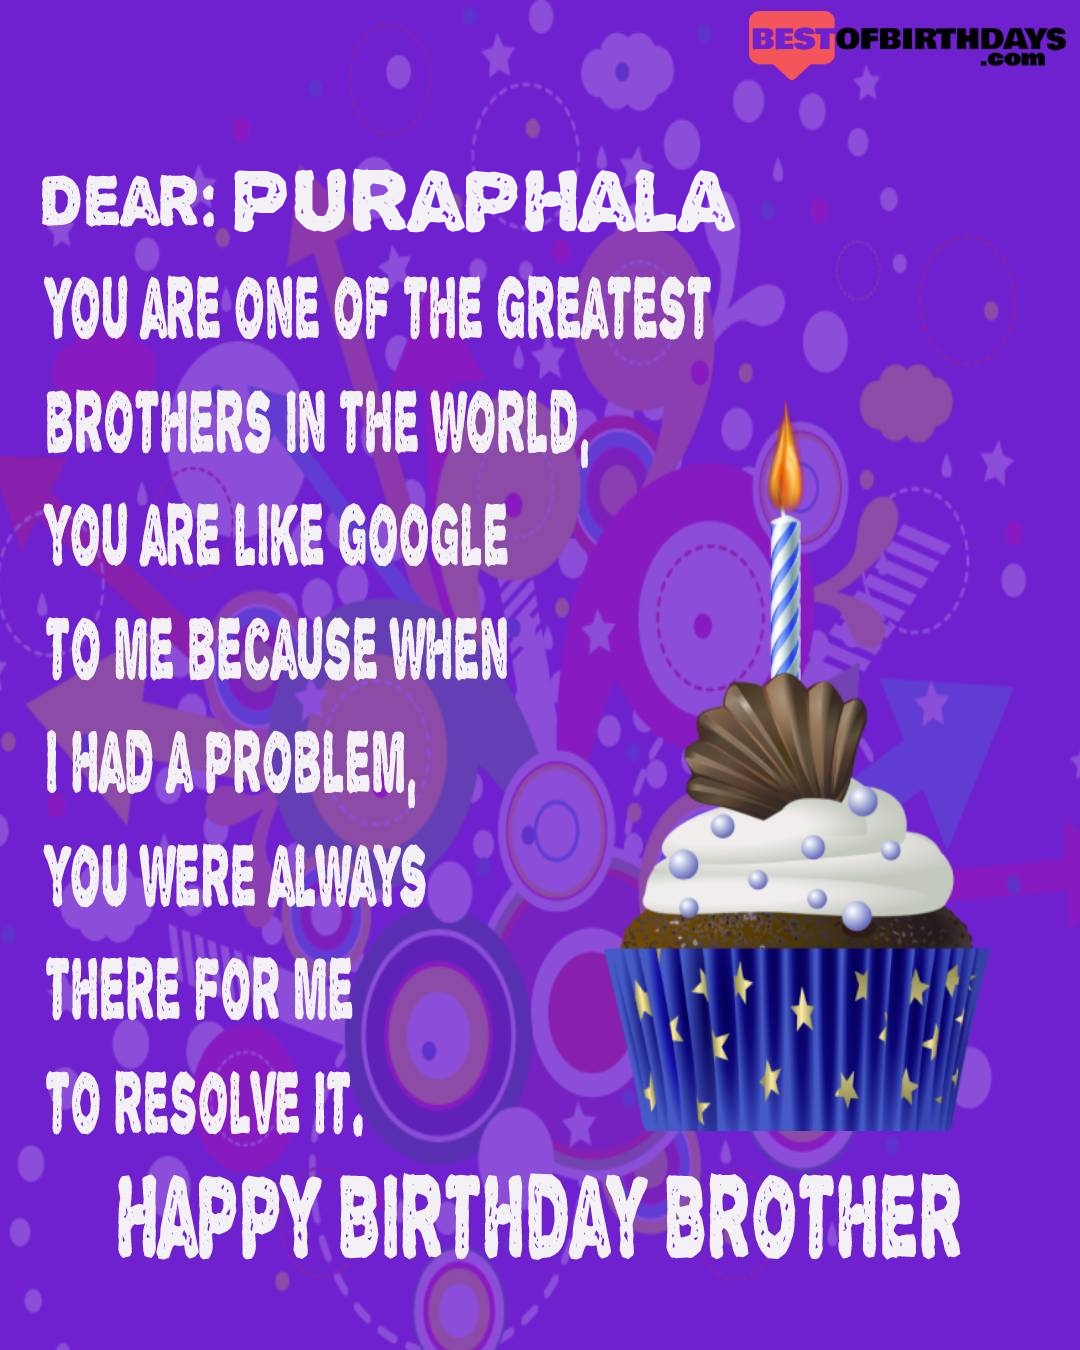 Happy birthday puraphala bhai brother bro